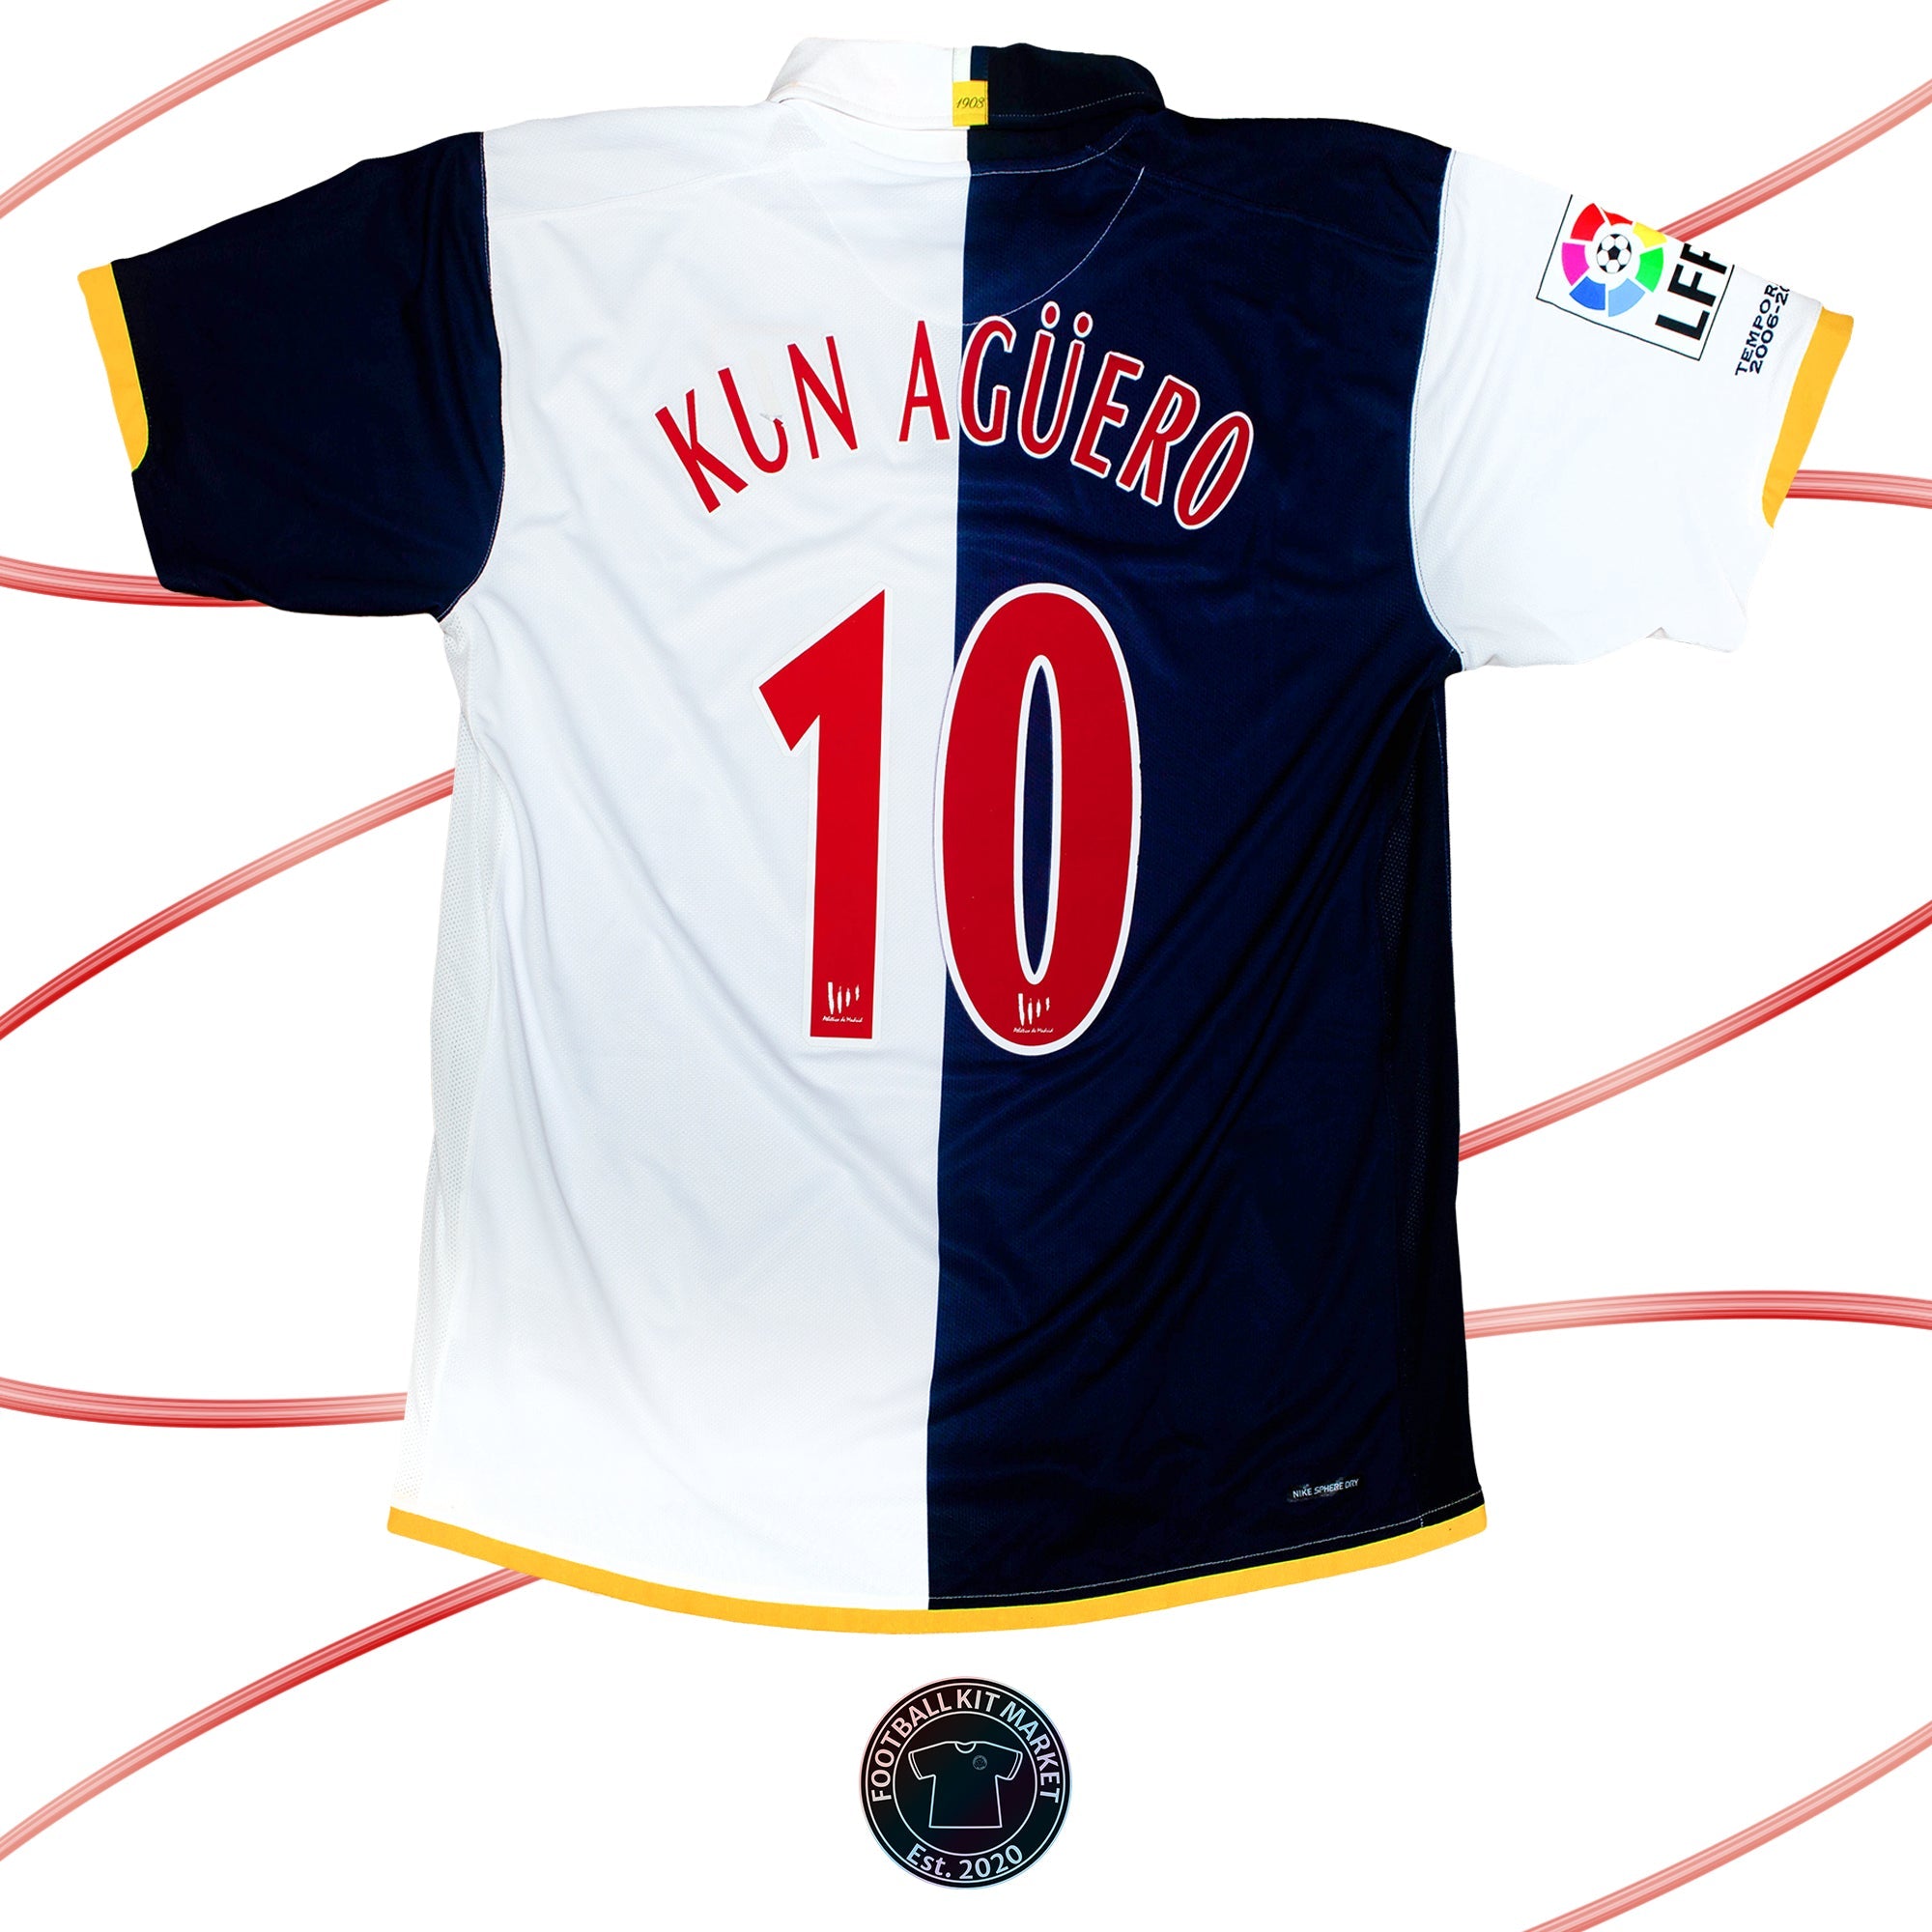 Genuine ATLETICO MADRID Away Shirt KUN AGUERO (2006-2007) - NIKE (XXL) - Product Image from Football Kit Market